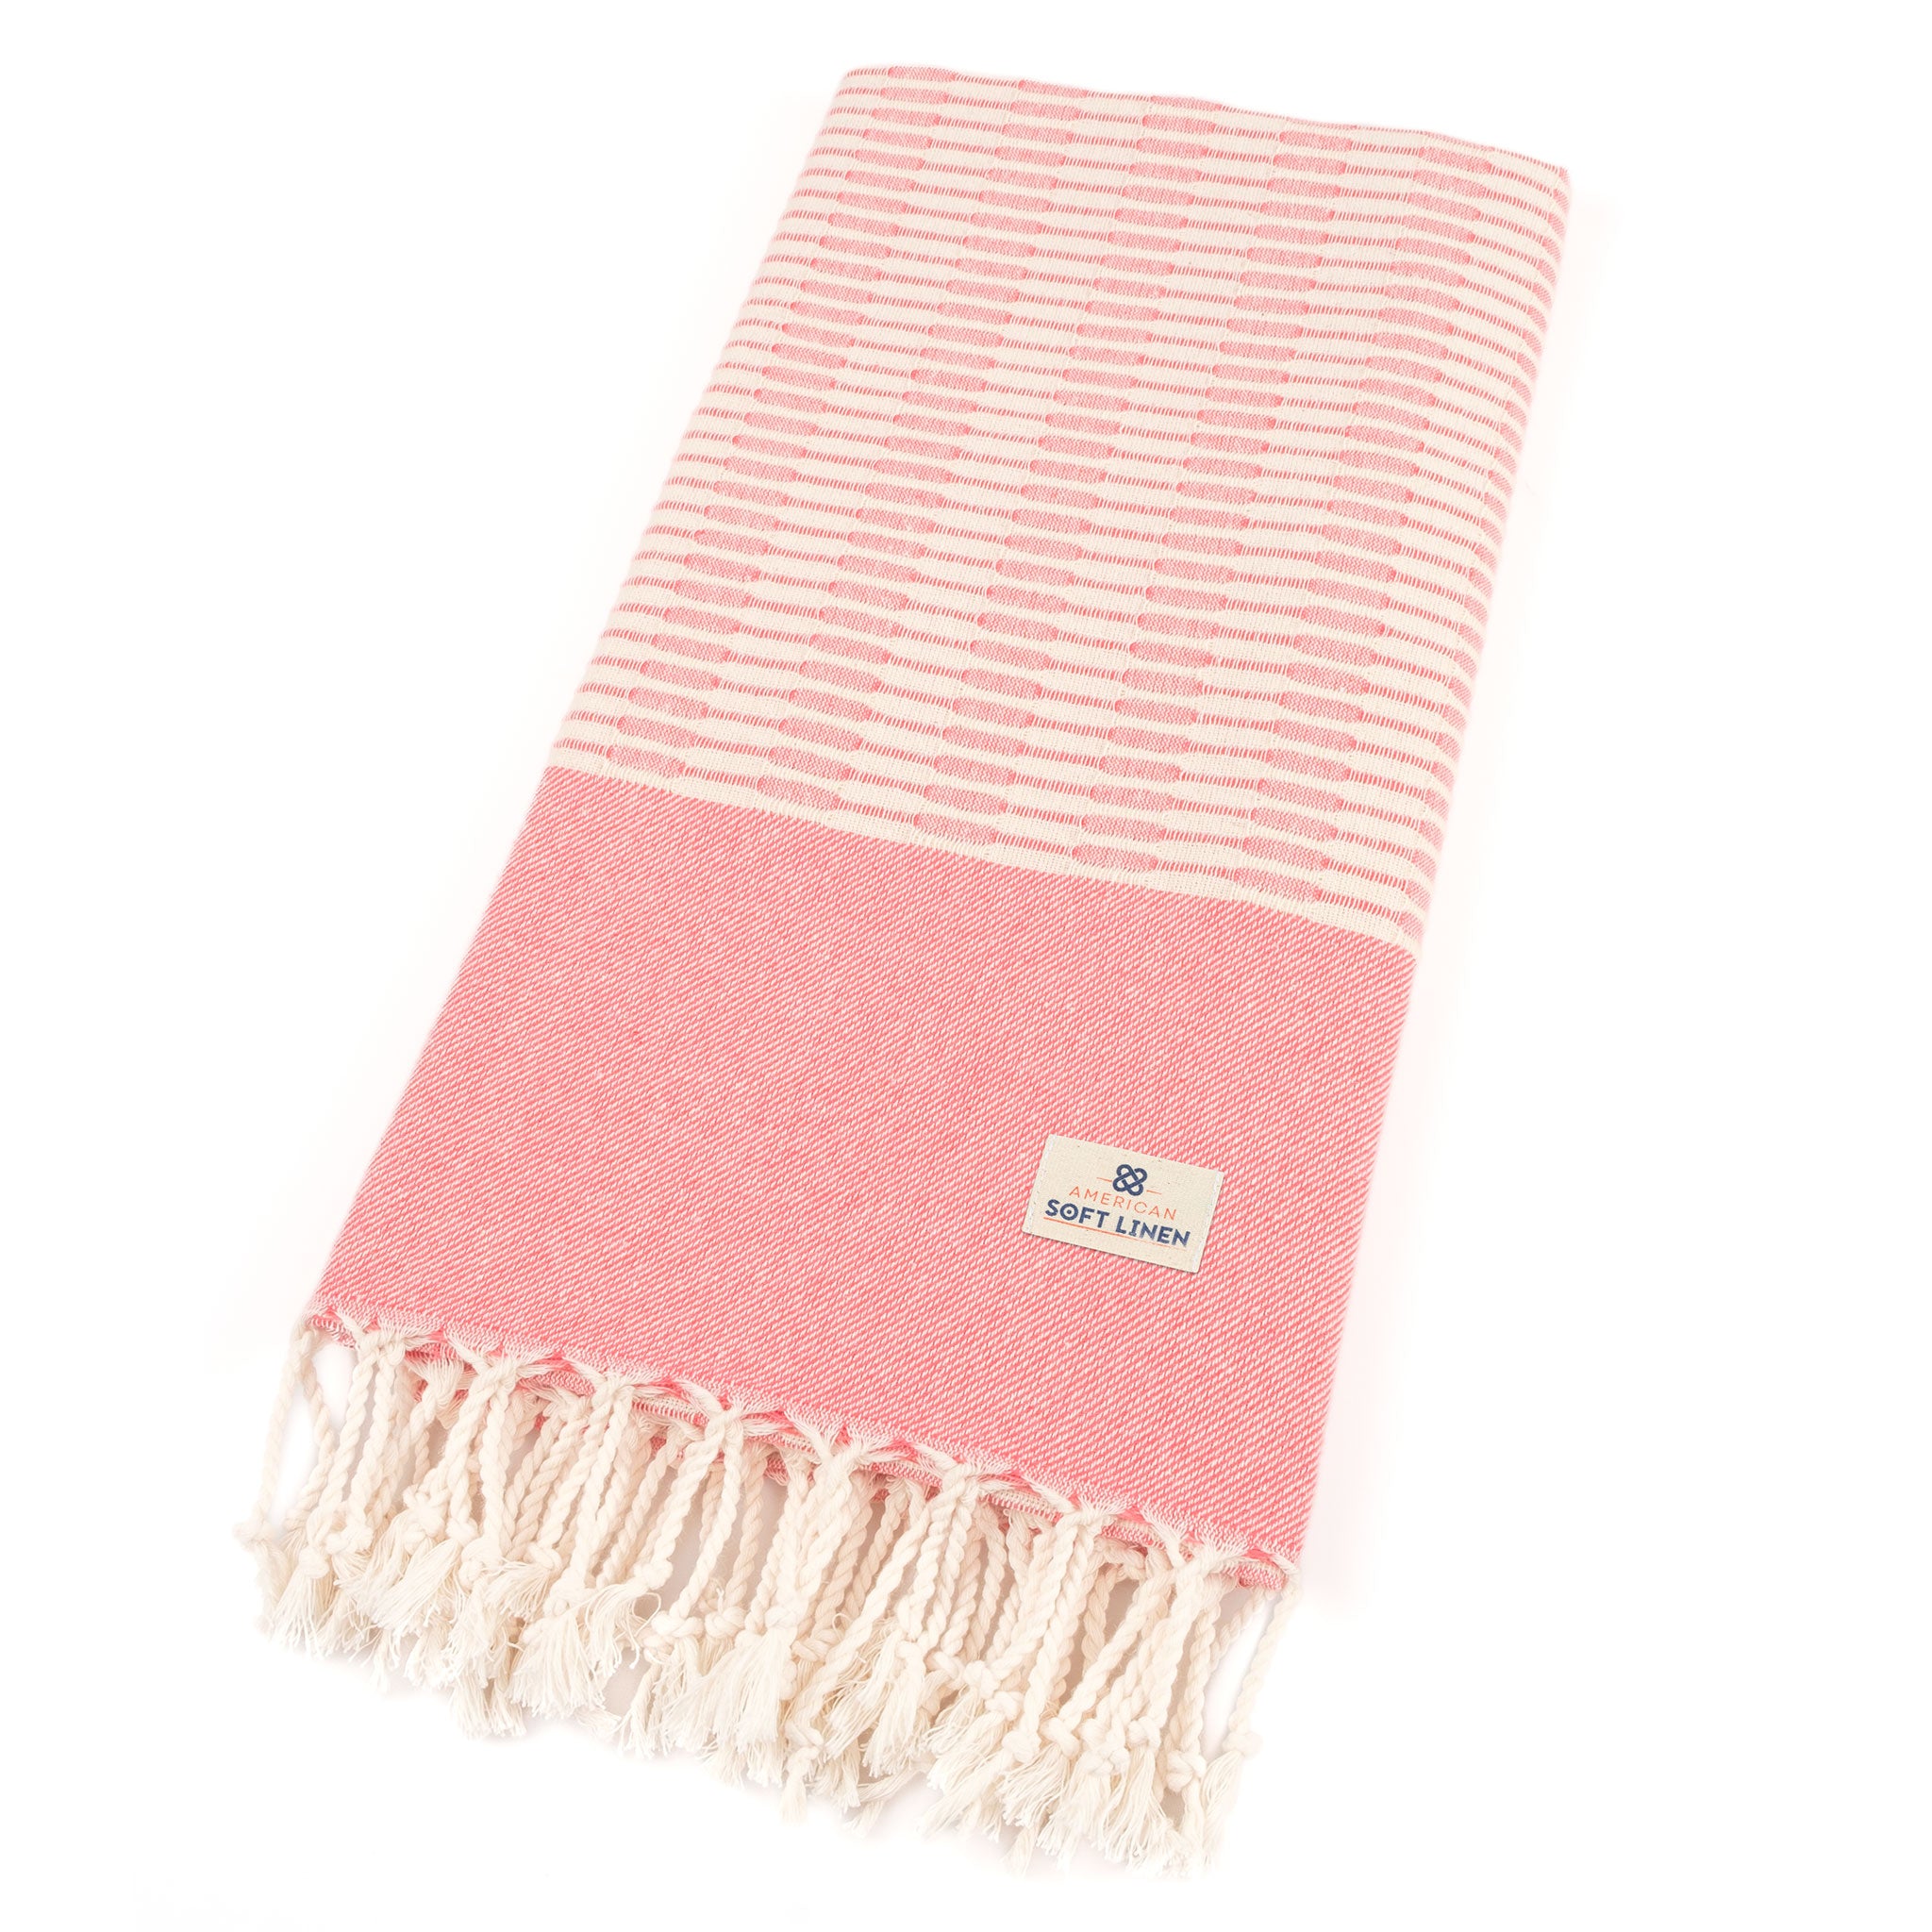 American Soft Linen - 100% Cotton Turkish Peshtemal Towels 40x70 Inches - Coral - 5